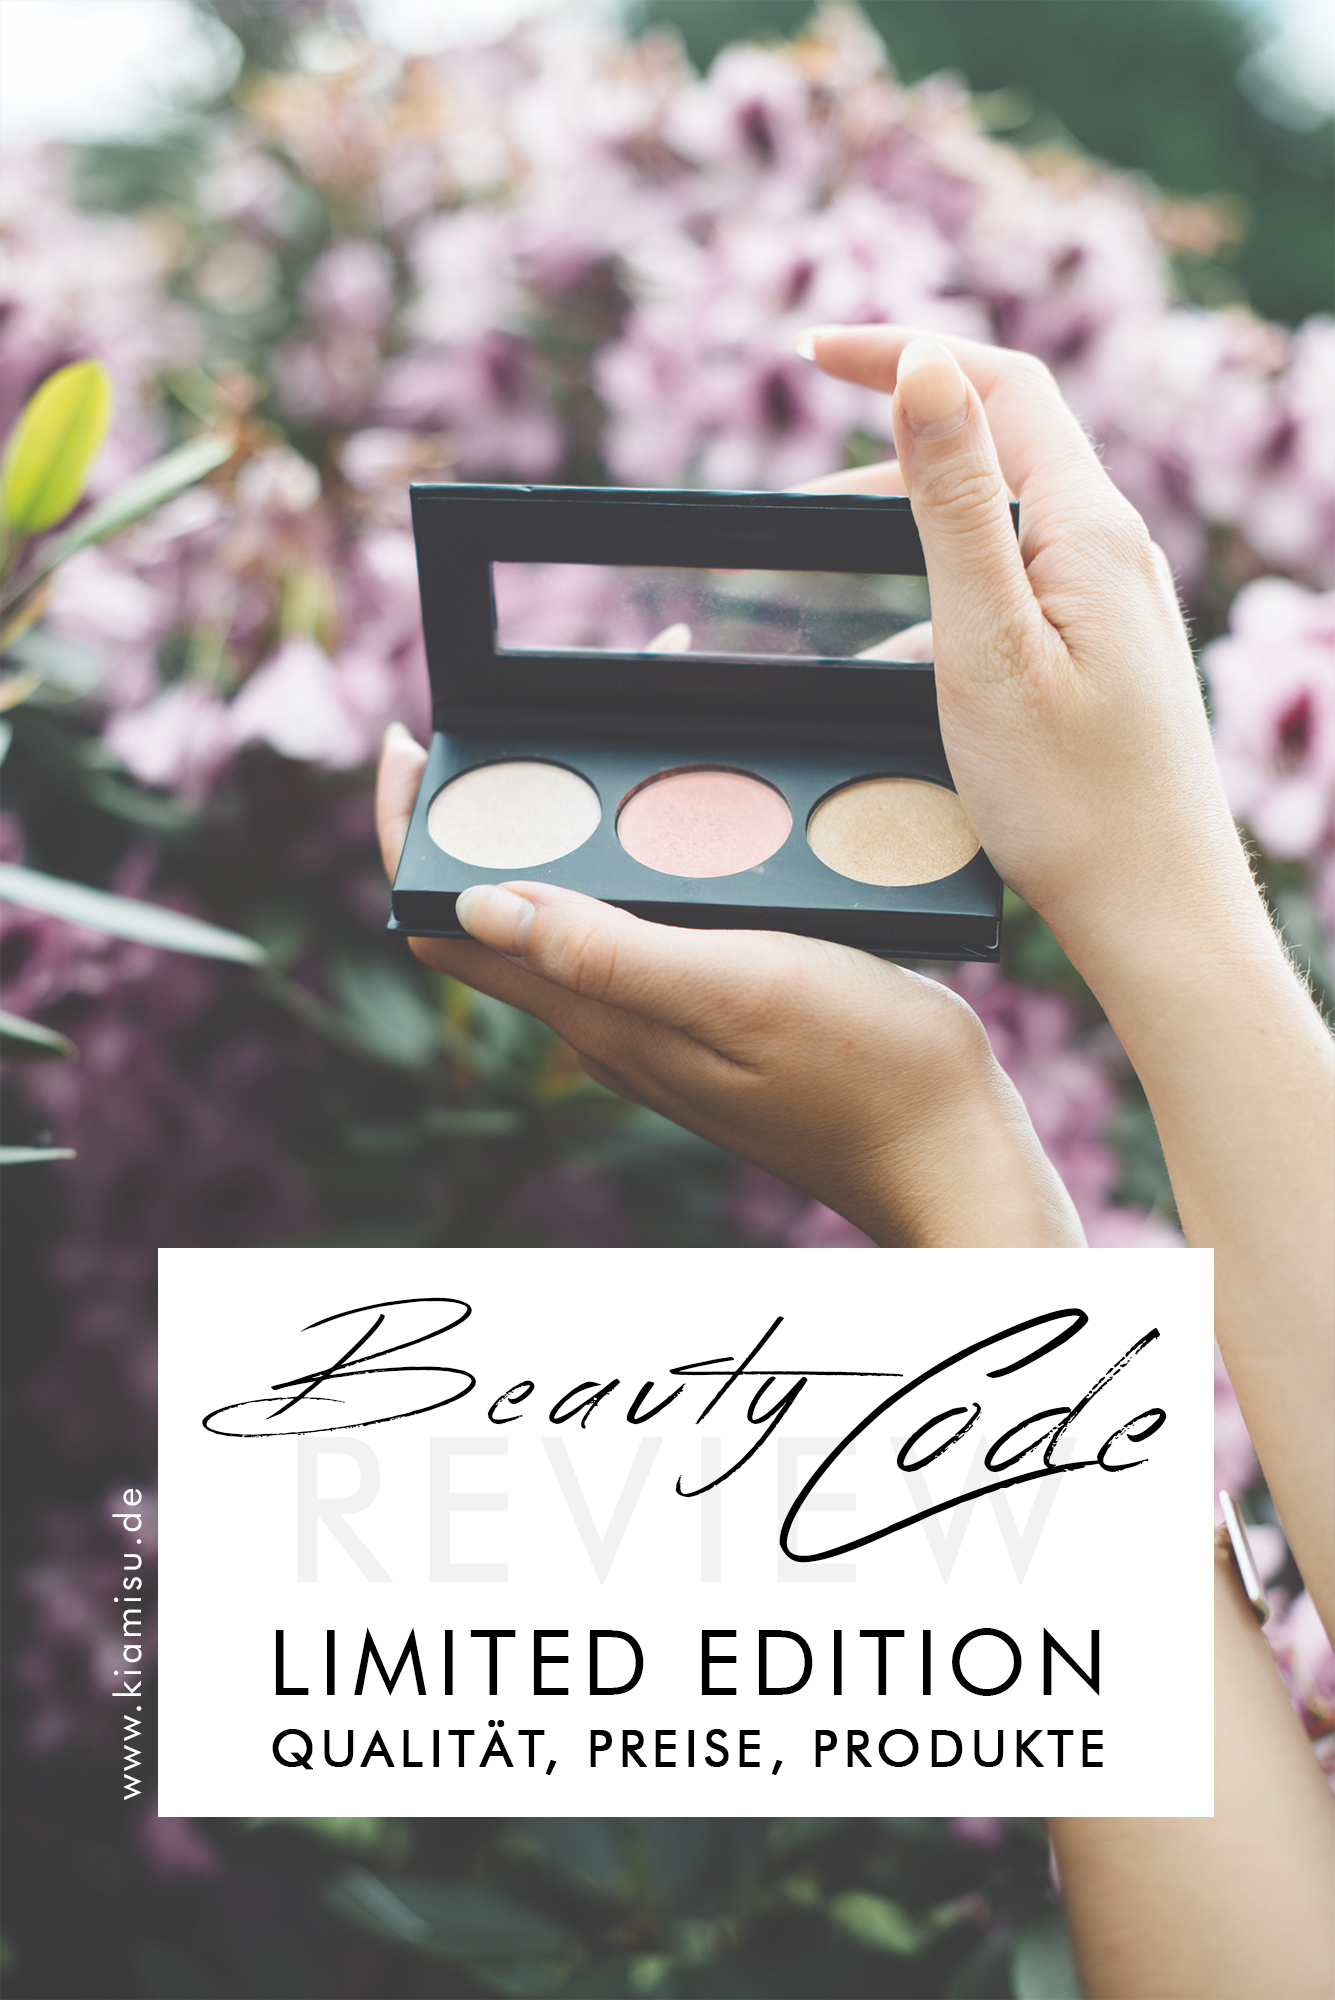 Rival De Loop Beauty Code Limited Edition_Rossmann_Beautyblog_Strobing Palette_Kiamisu-Final1